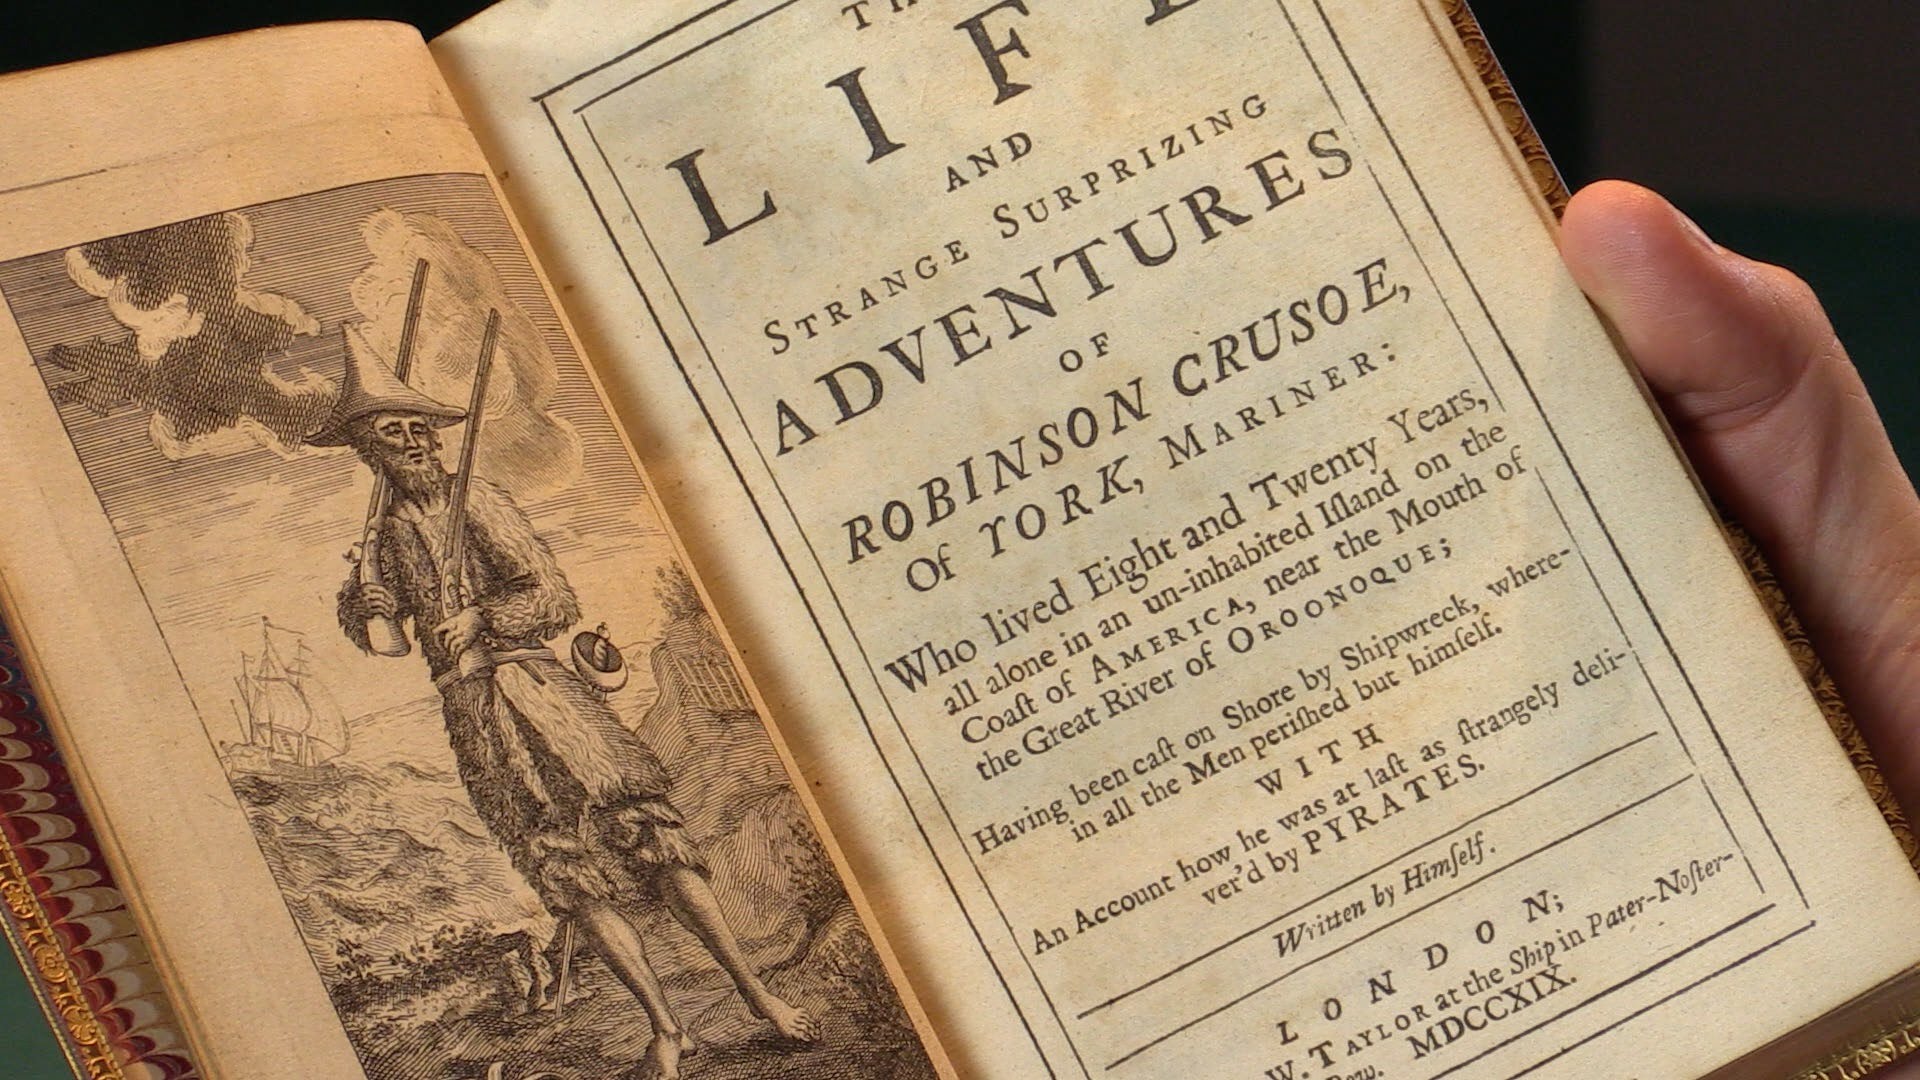 Робинзон крузо на английском языке. Daniel Defoe Робинзон. Робинзон Крузо первое издание 1719 года. Defoe Daniel "Robinson Crusoe". Робинзон Крузо первое издание.